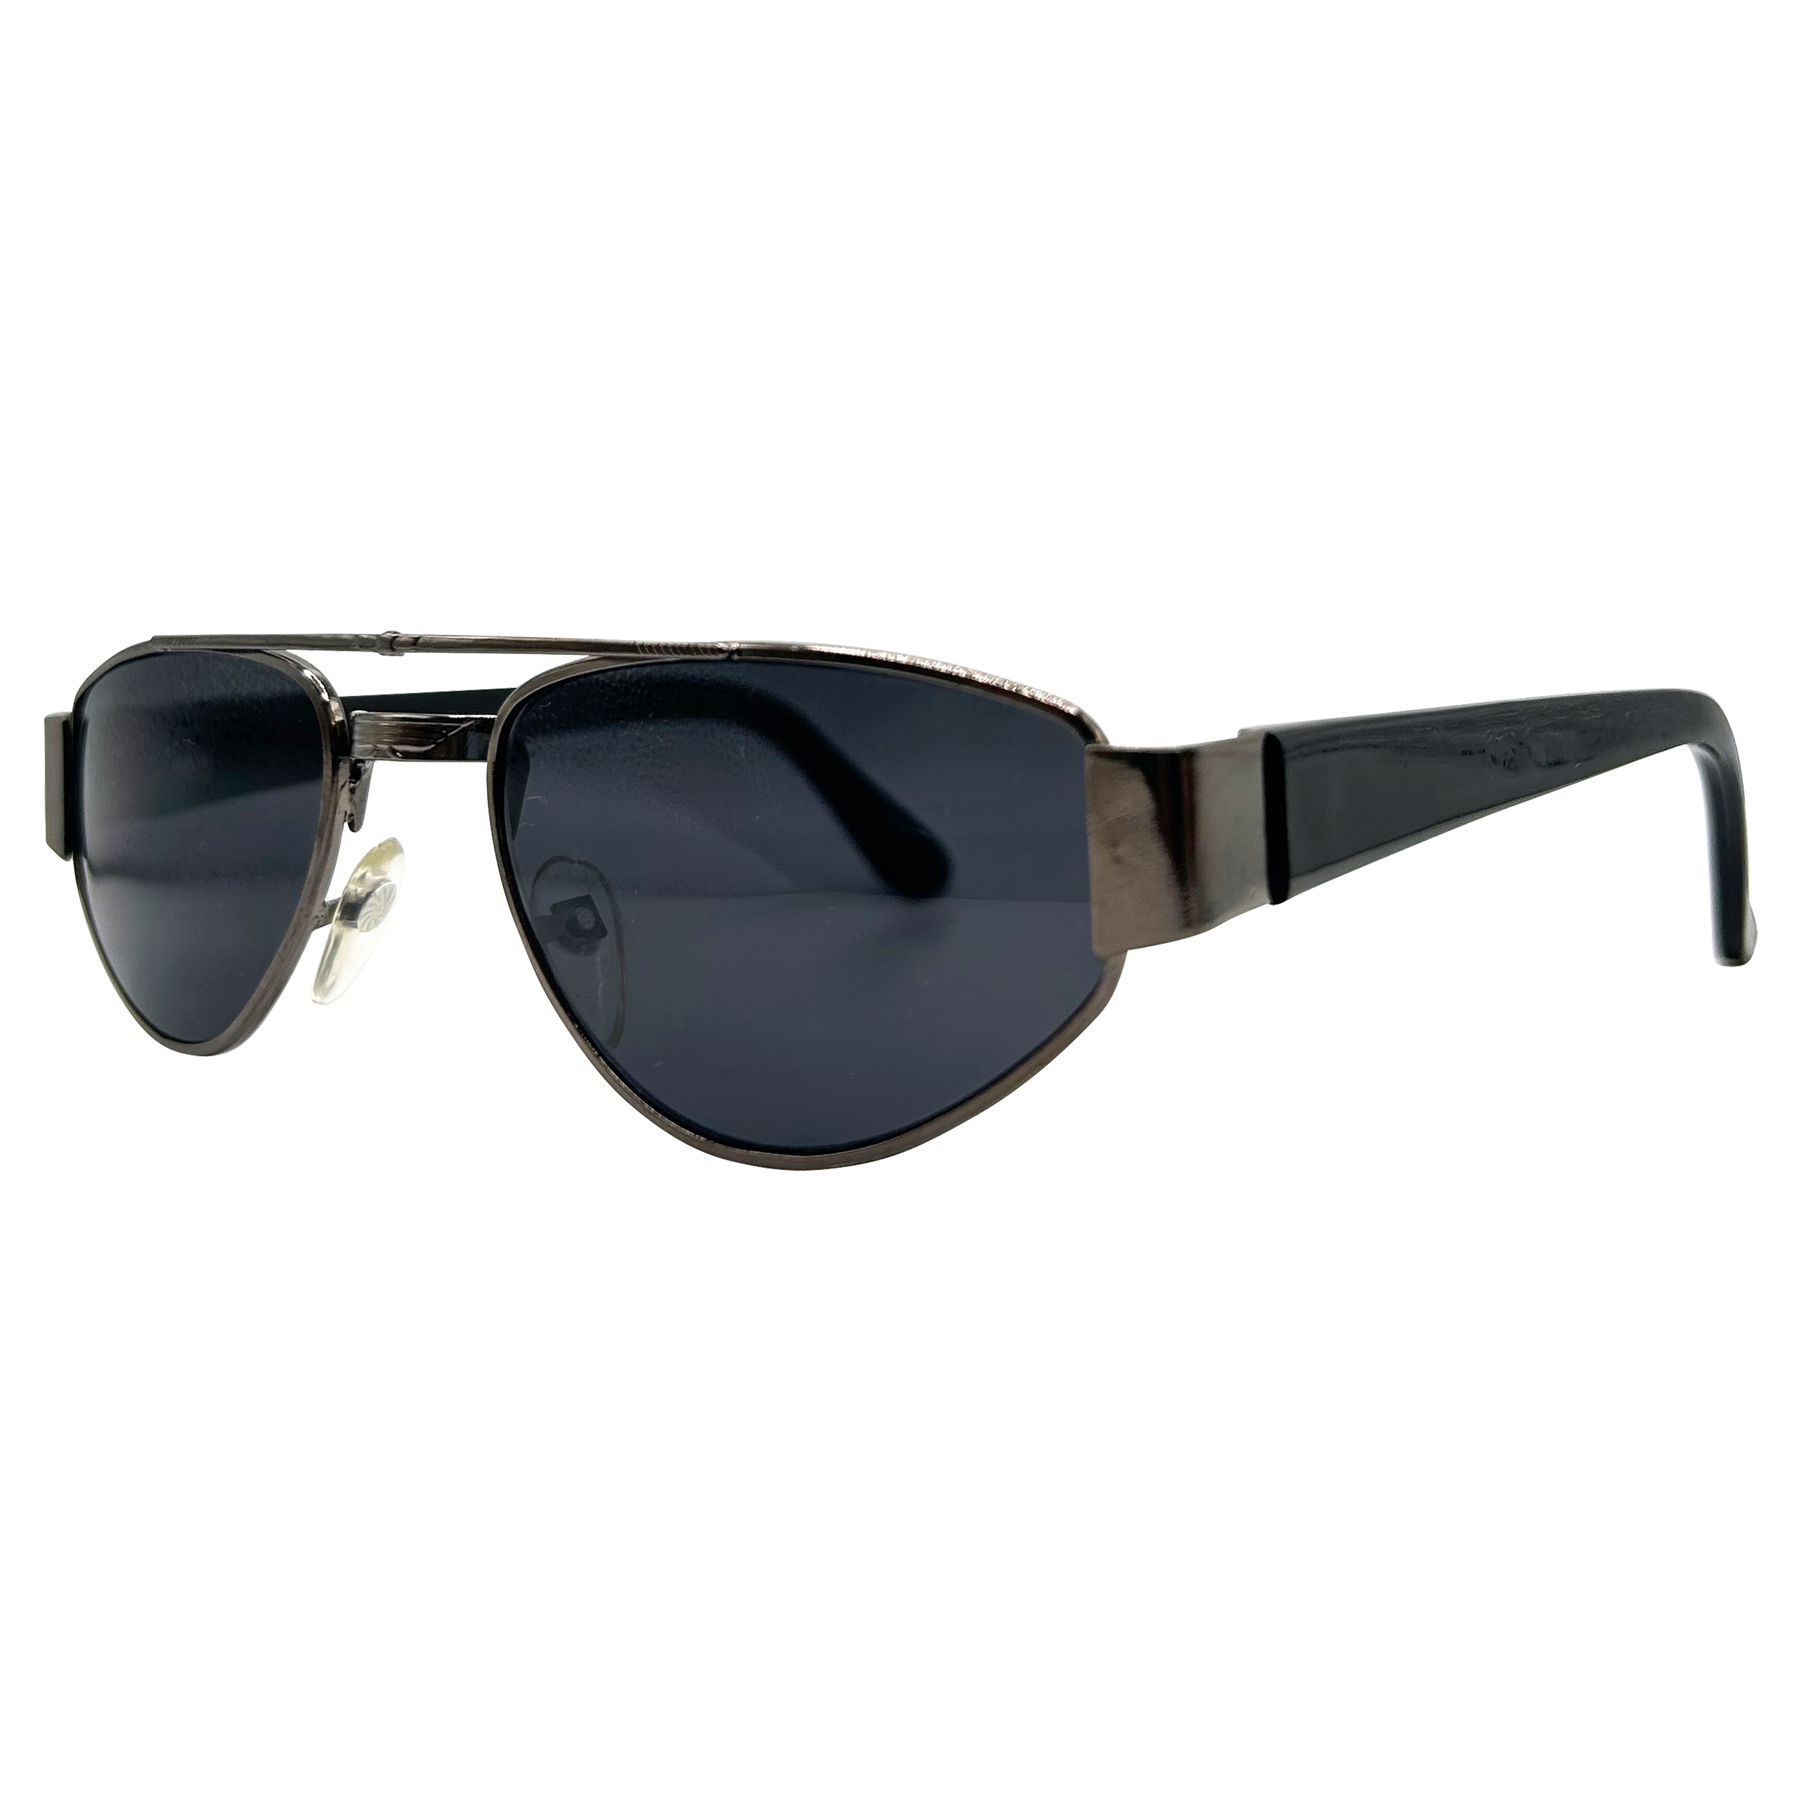 ZZYZX Black Gunmetal/Super Dark Sports Sunglasses